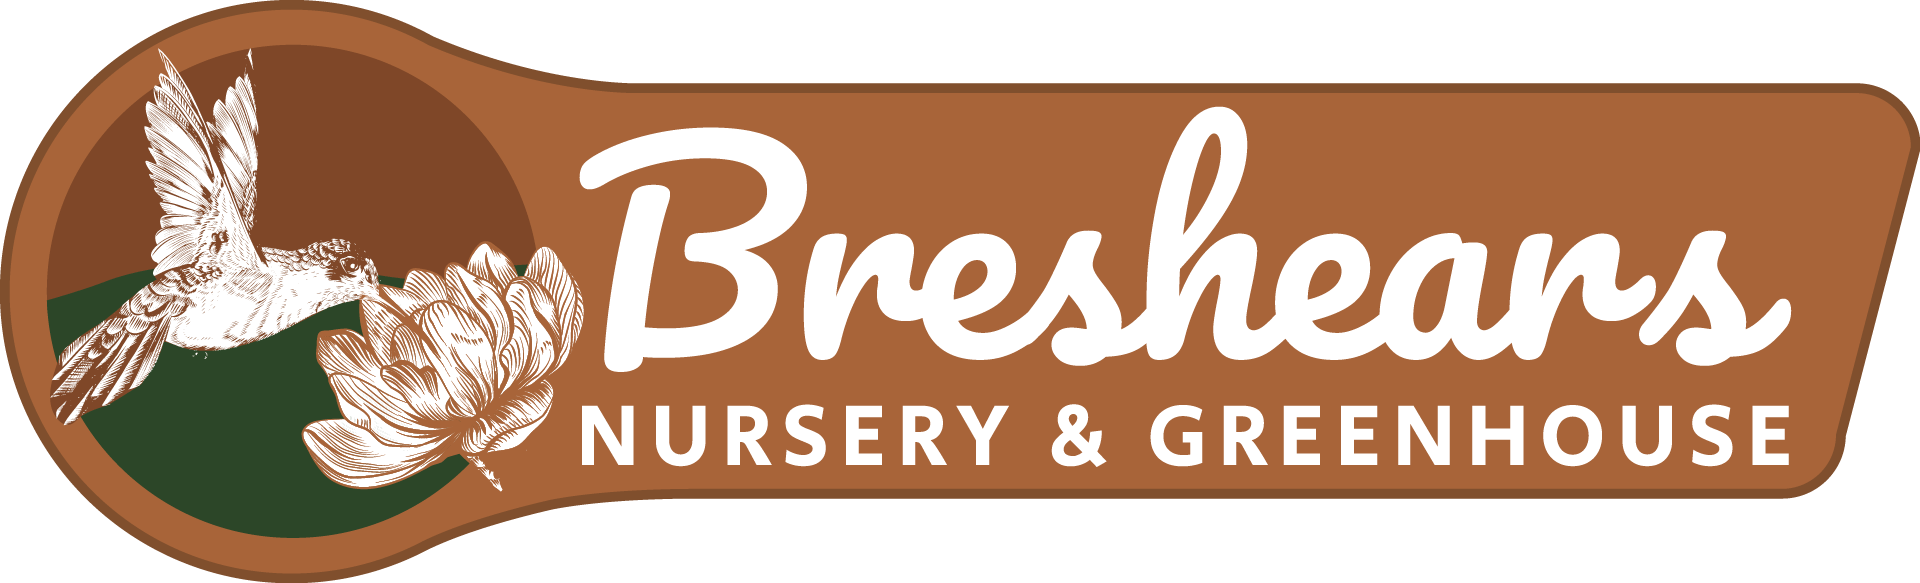 Breshears Nursery & Greenhouse in Hot Springs, Arkansas